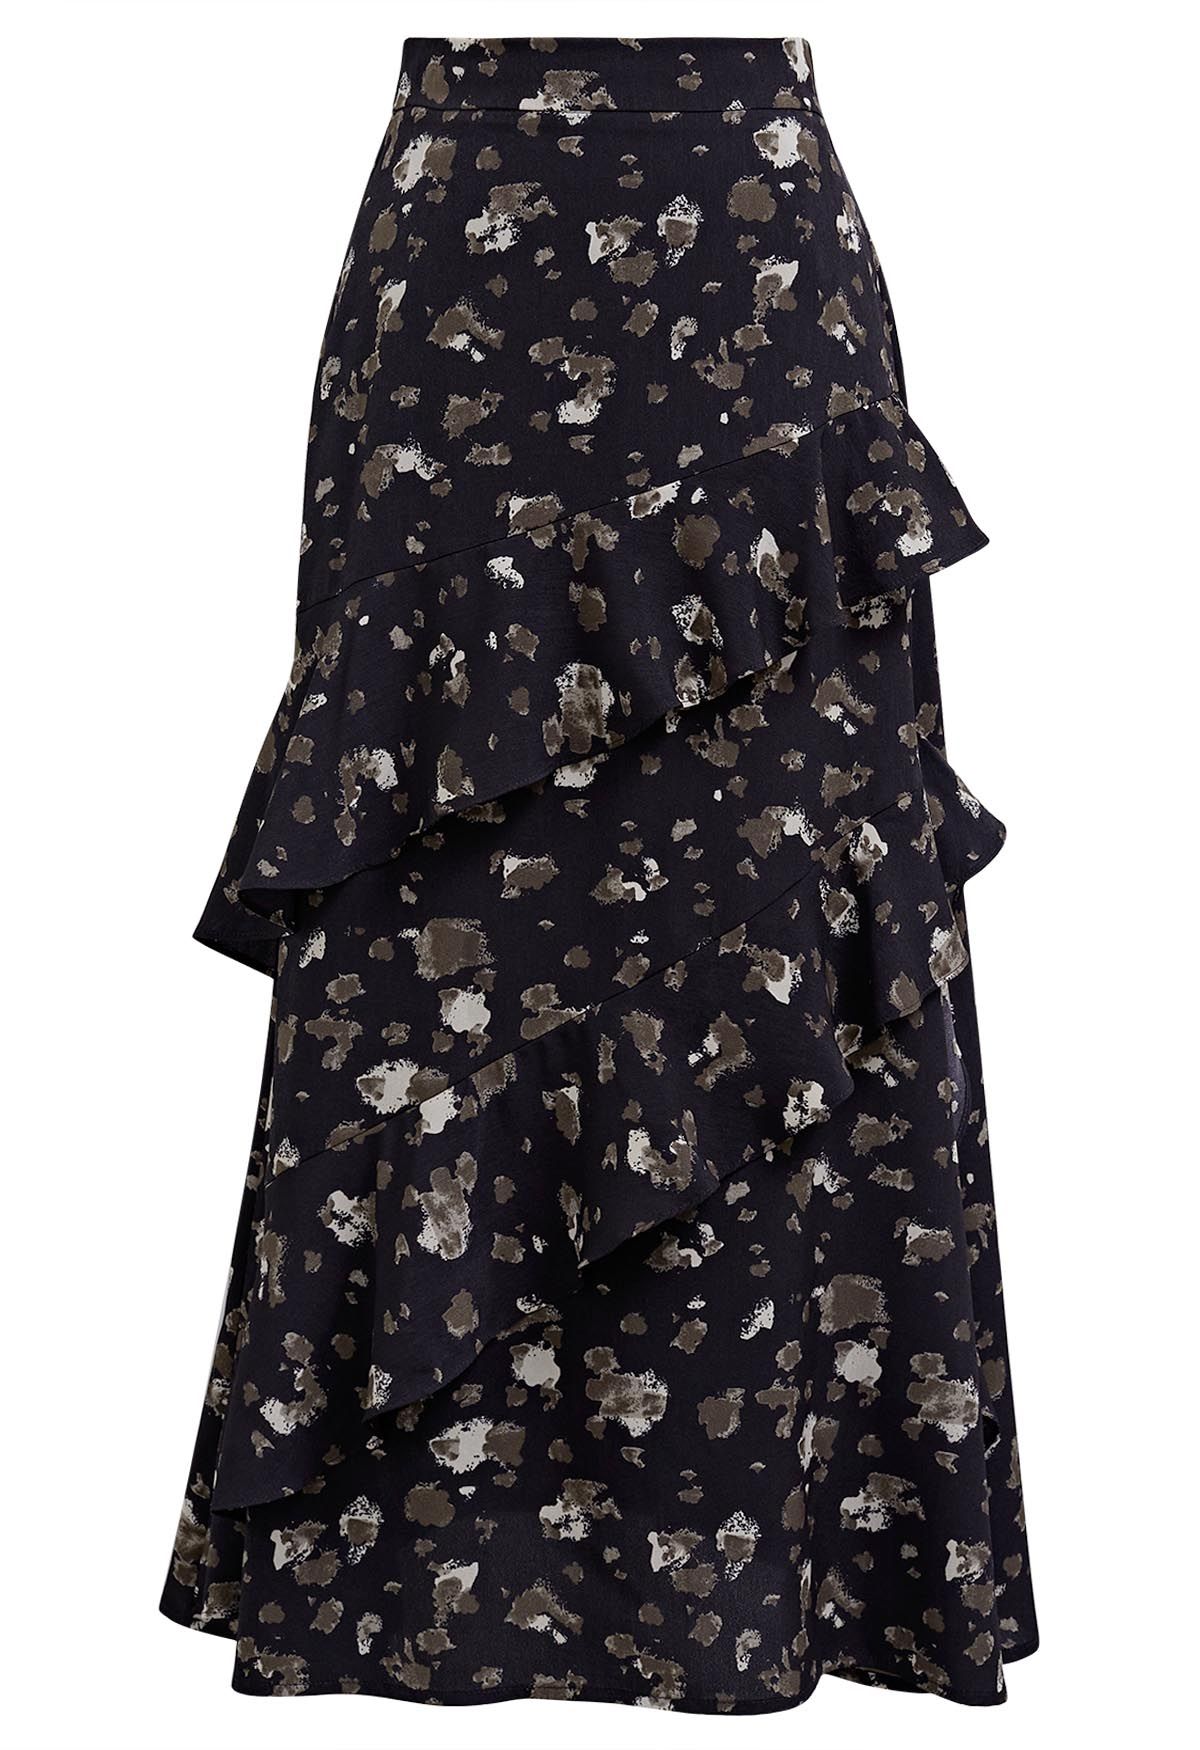 Inky Spots Printed Ruffle Chiffon Skirt in Black